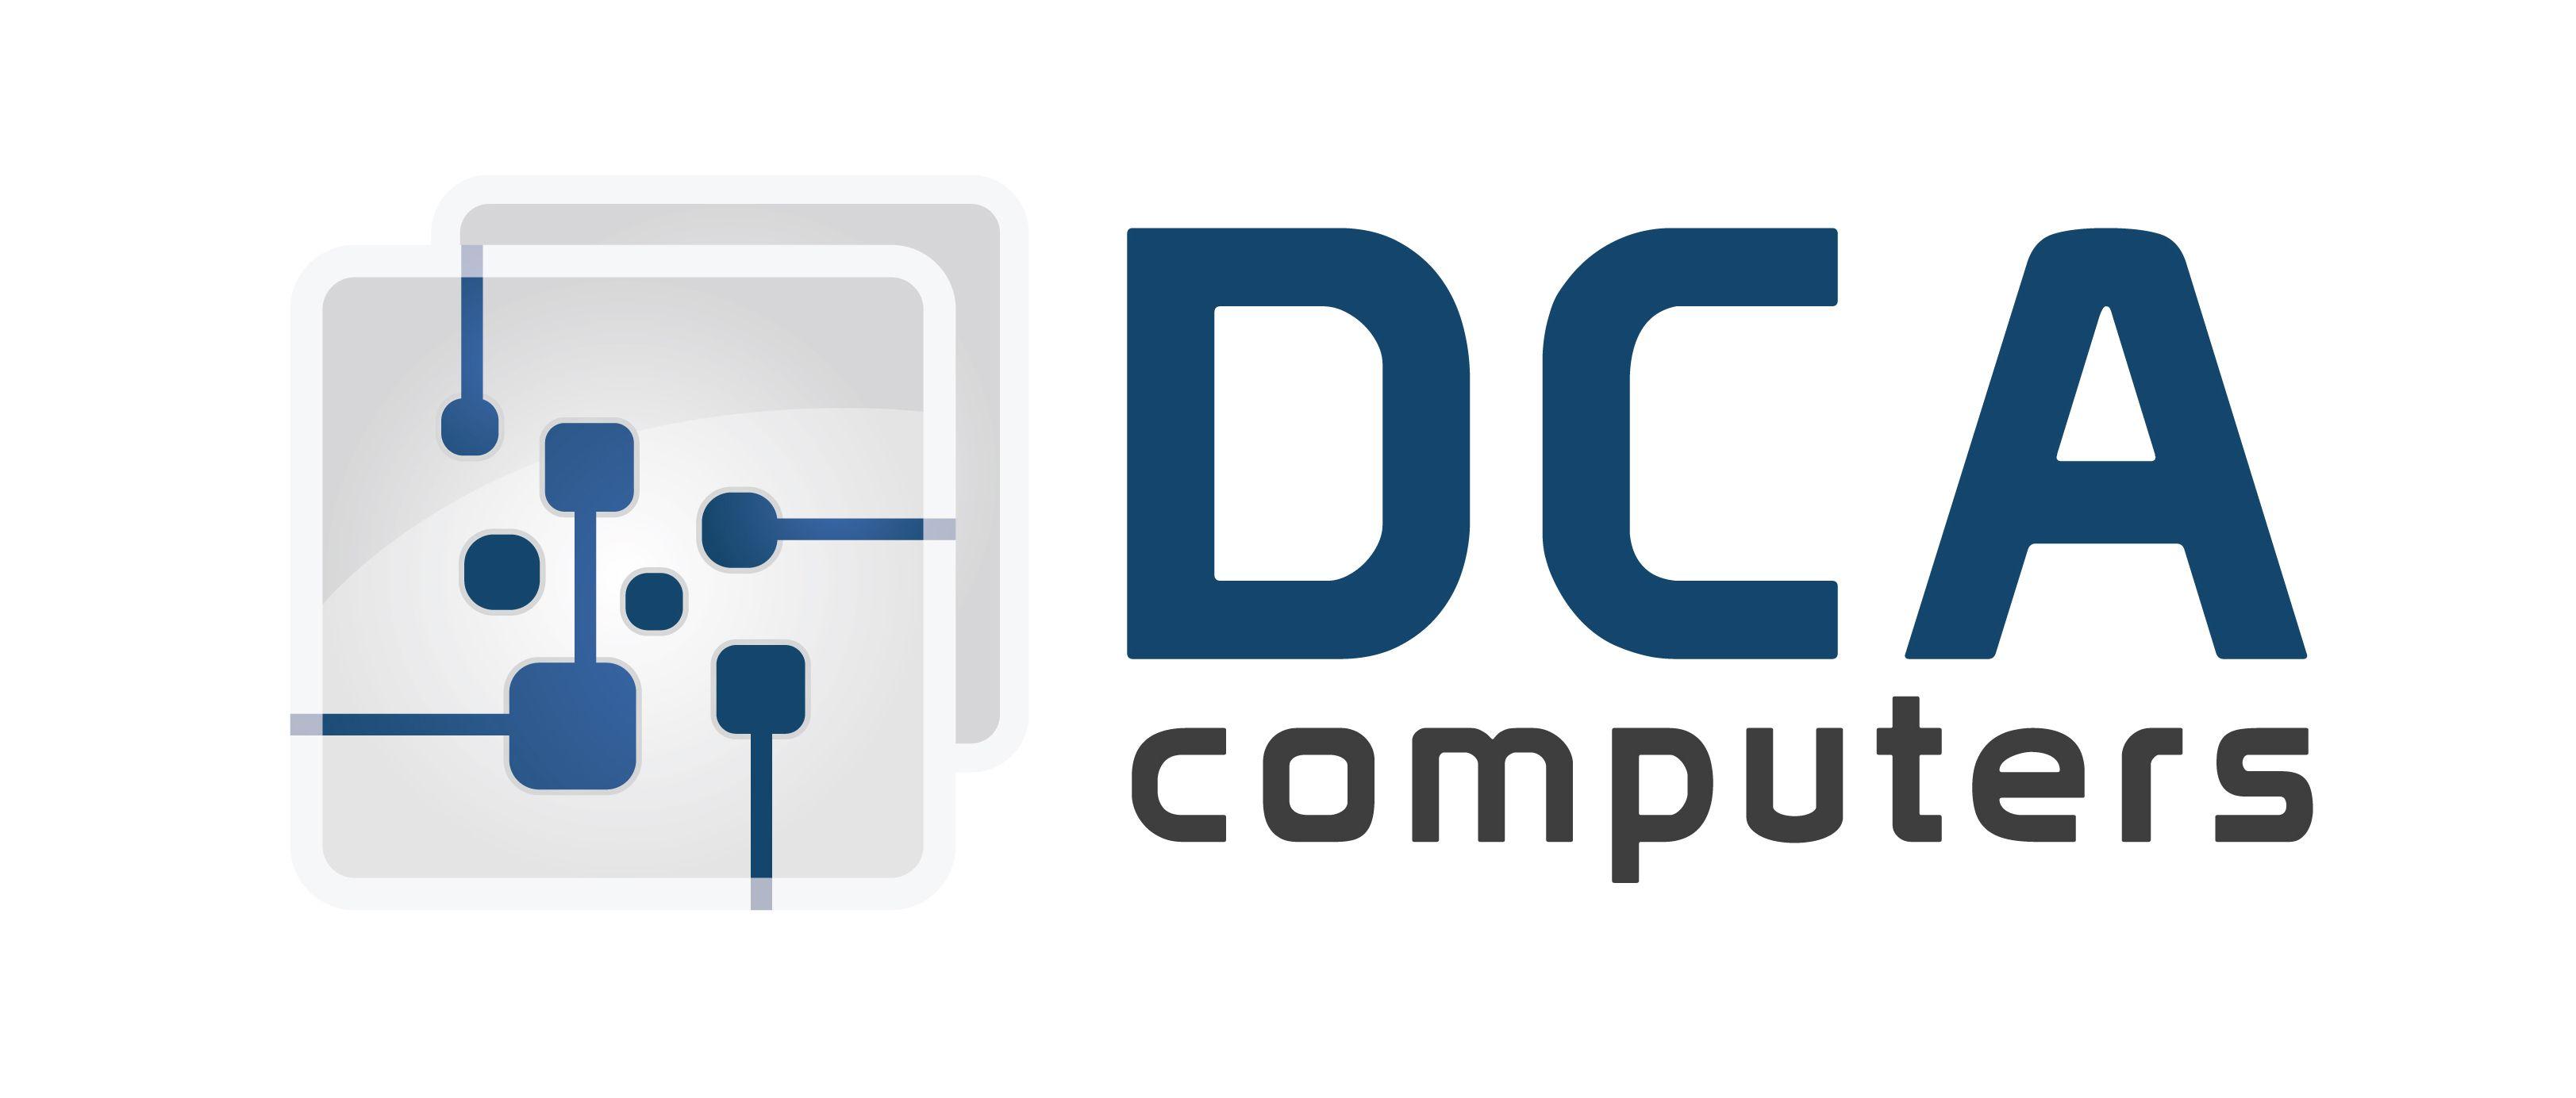 DCA Logo - Computer Logo Design for DCA computers by madacl | Design #44263